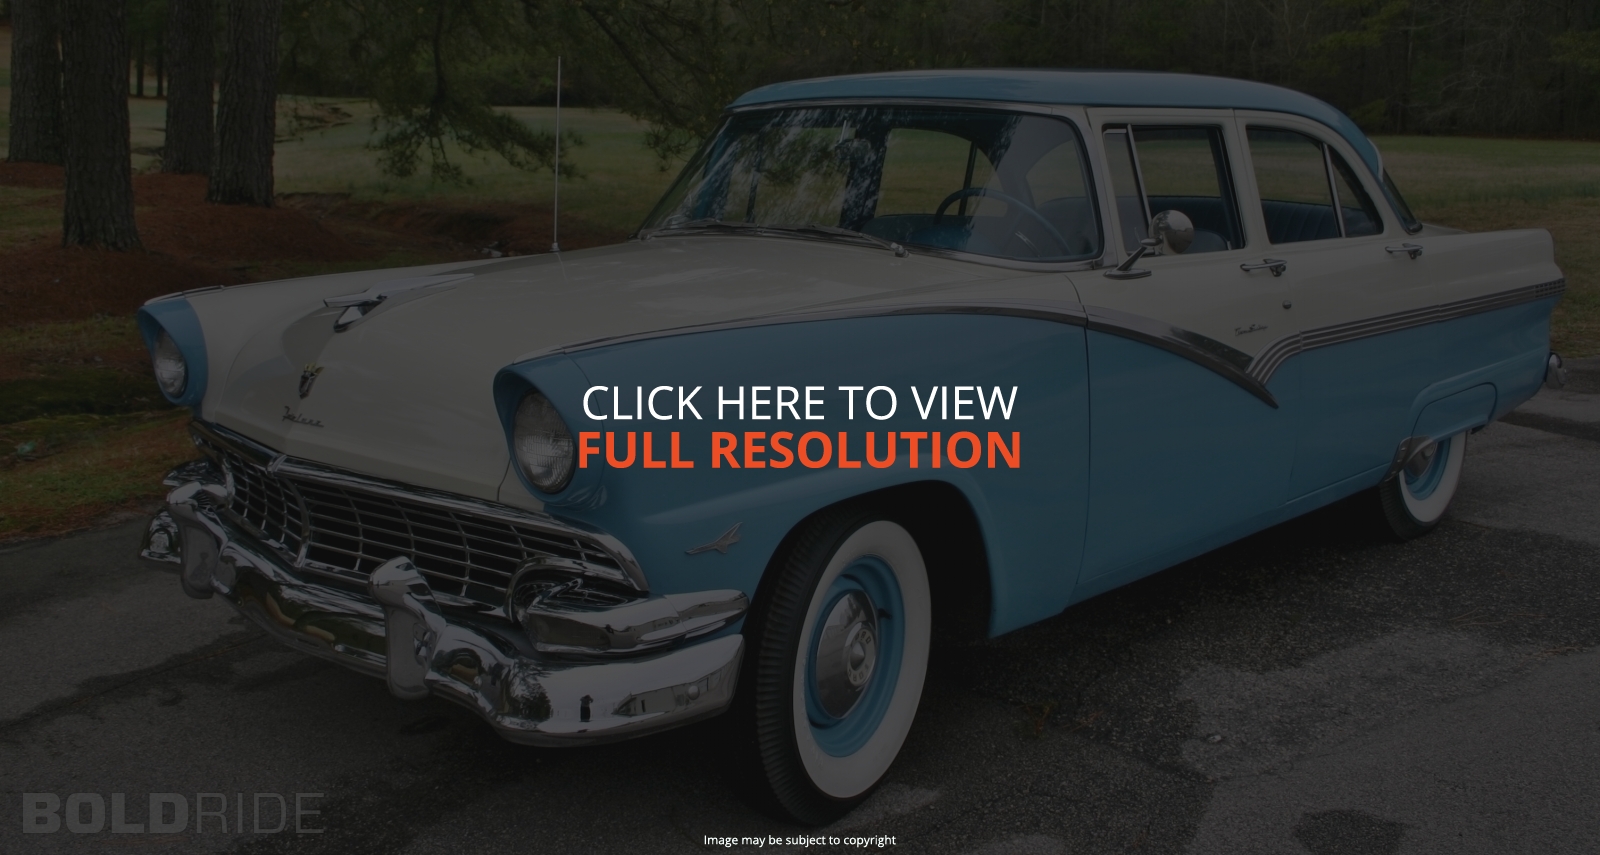 Ford Fairlane 1956 #1